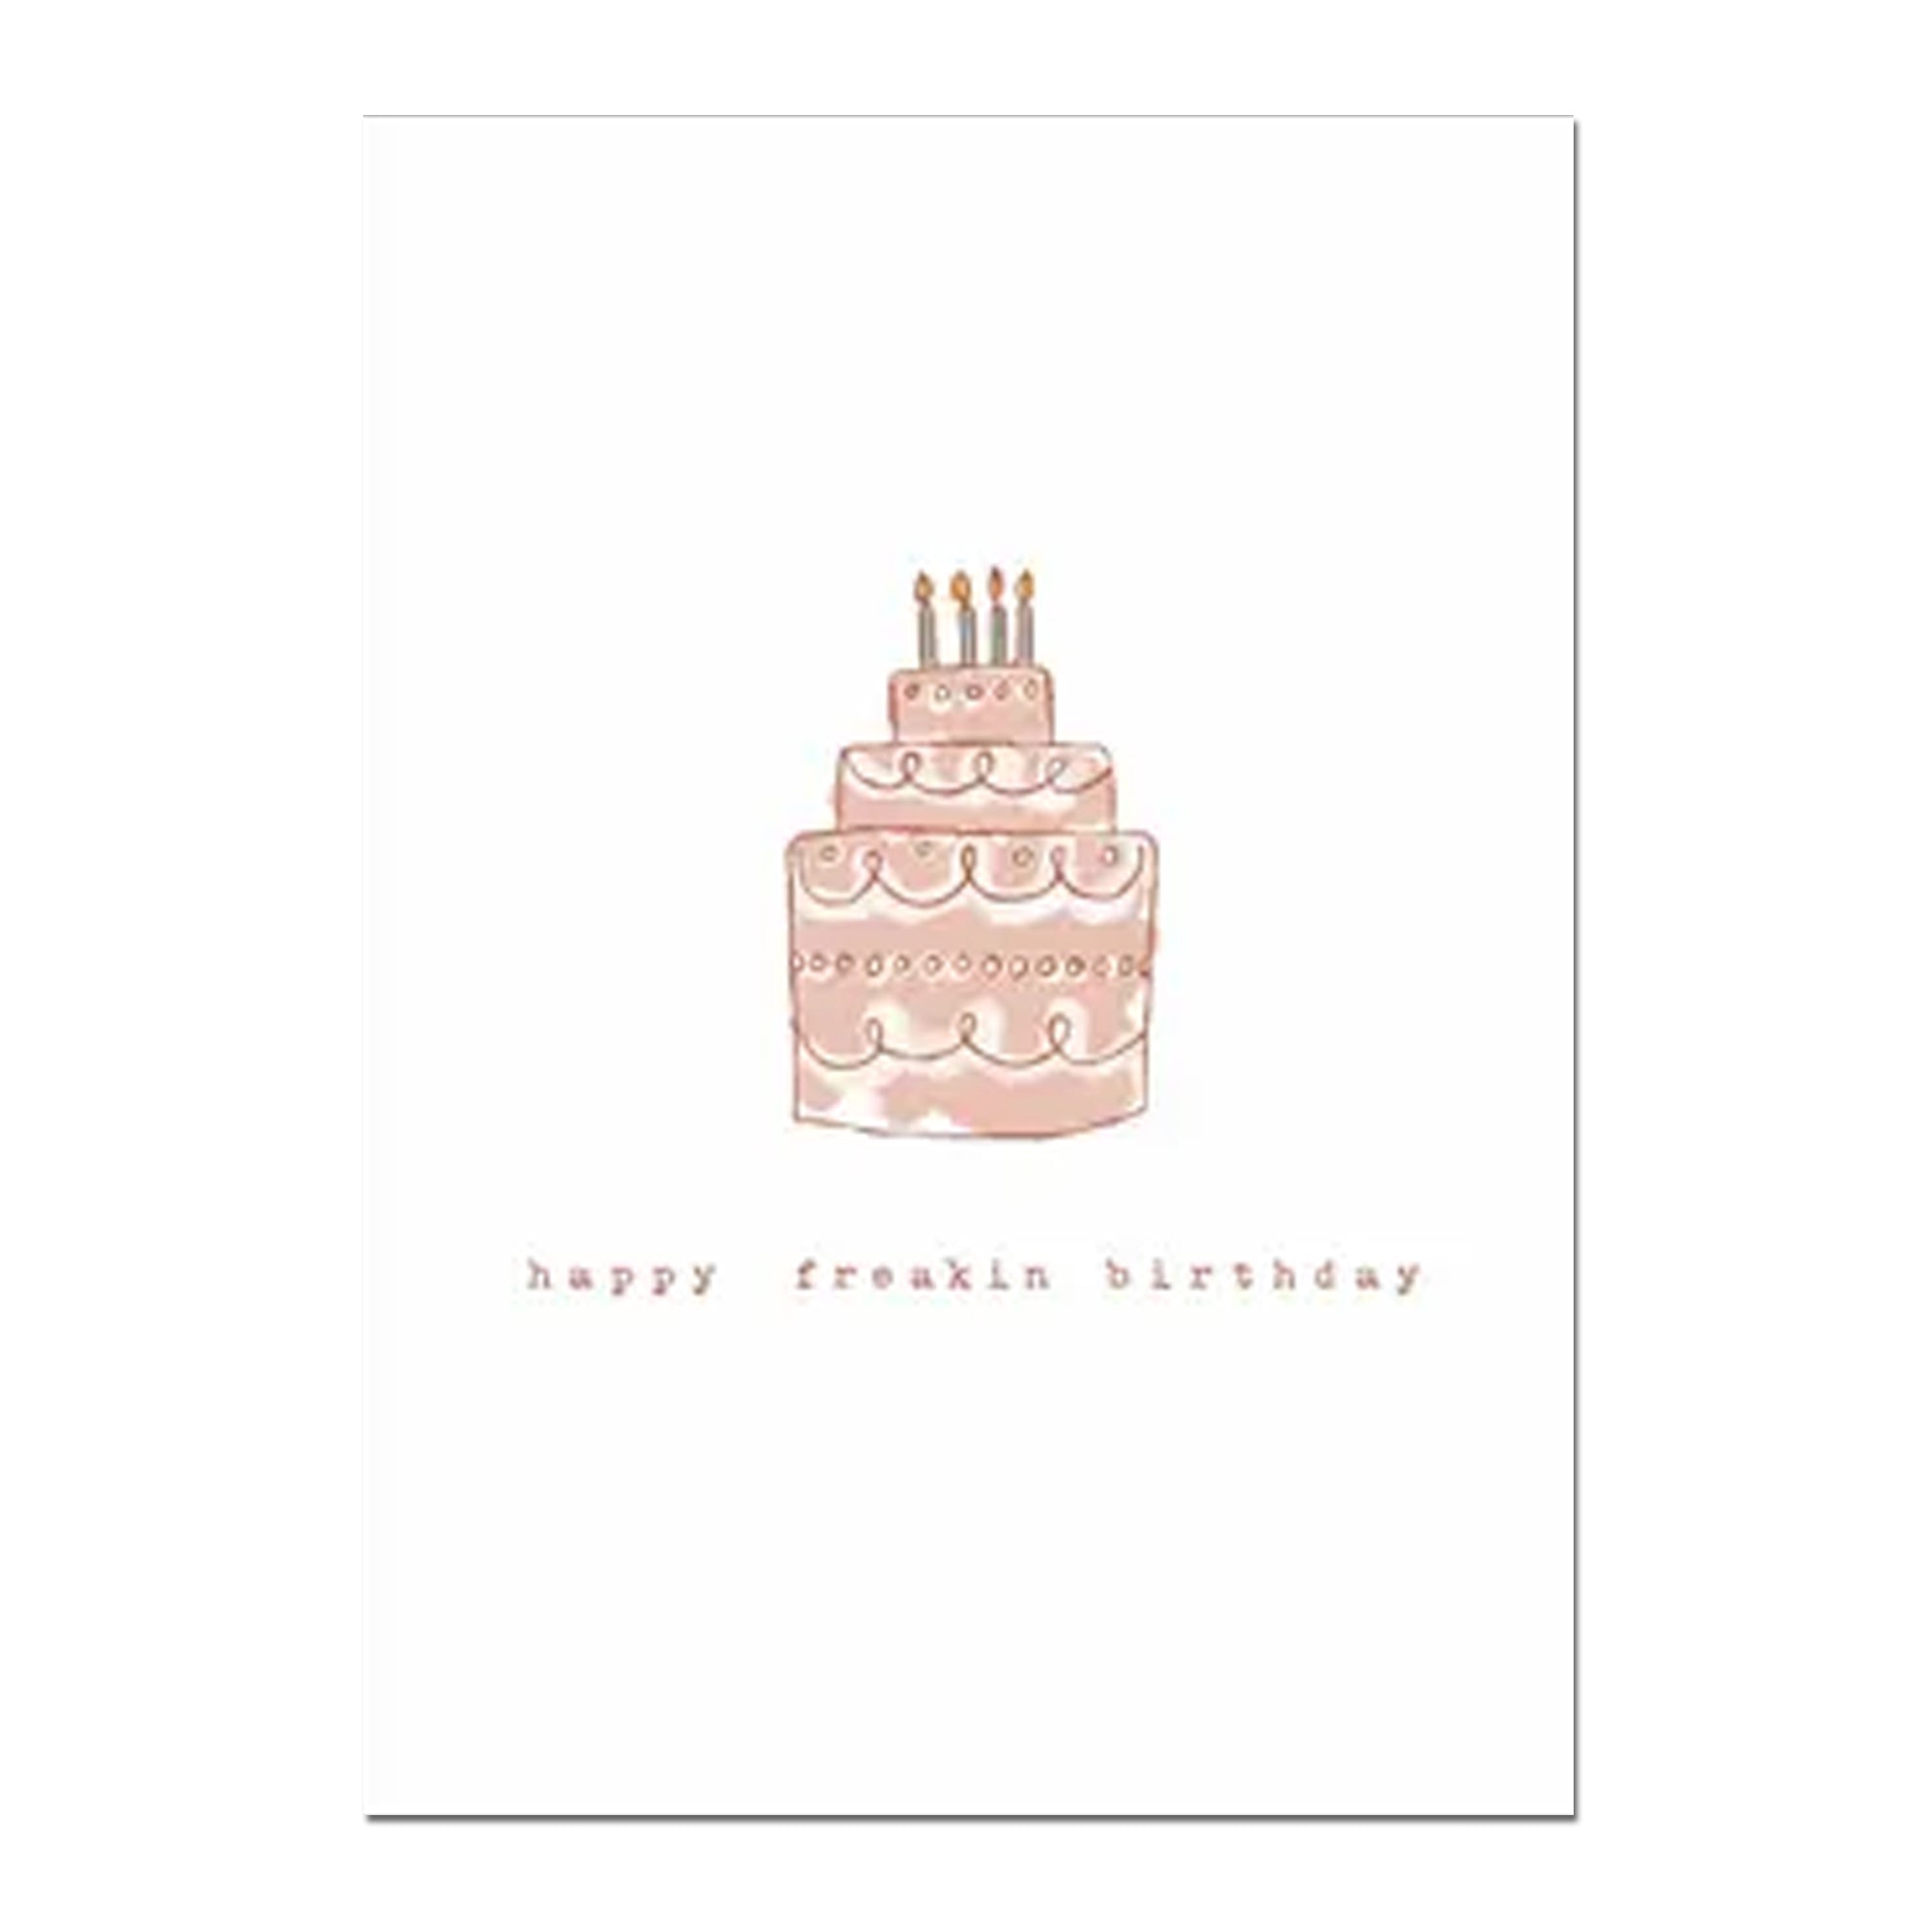 Party Tricks Chix Happy Frickin Birthday Card